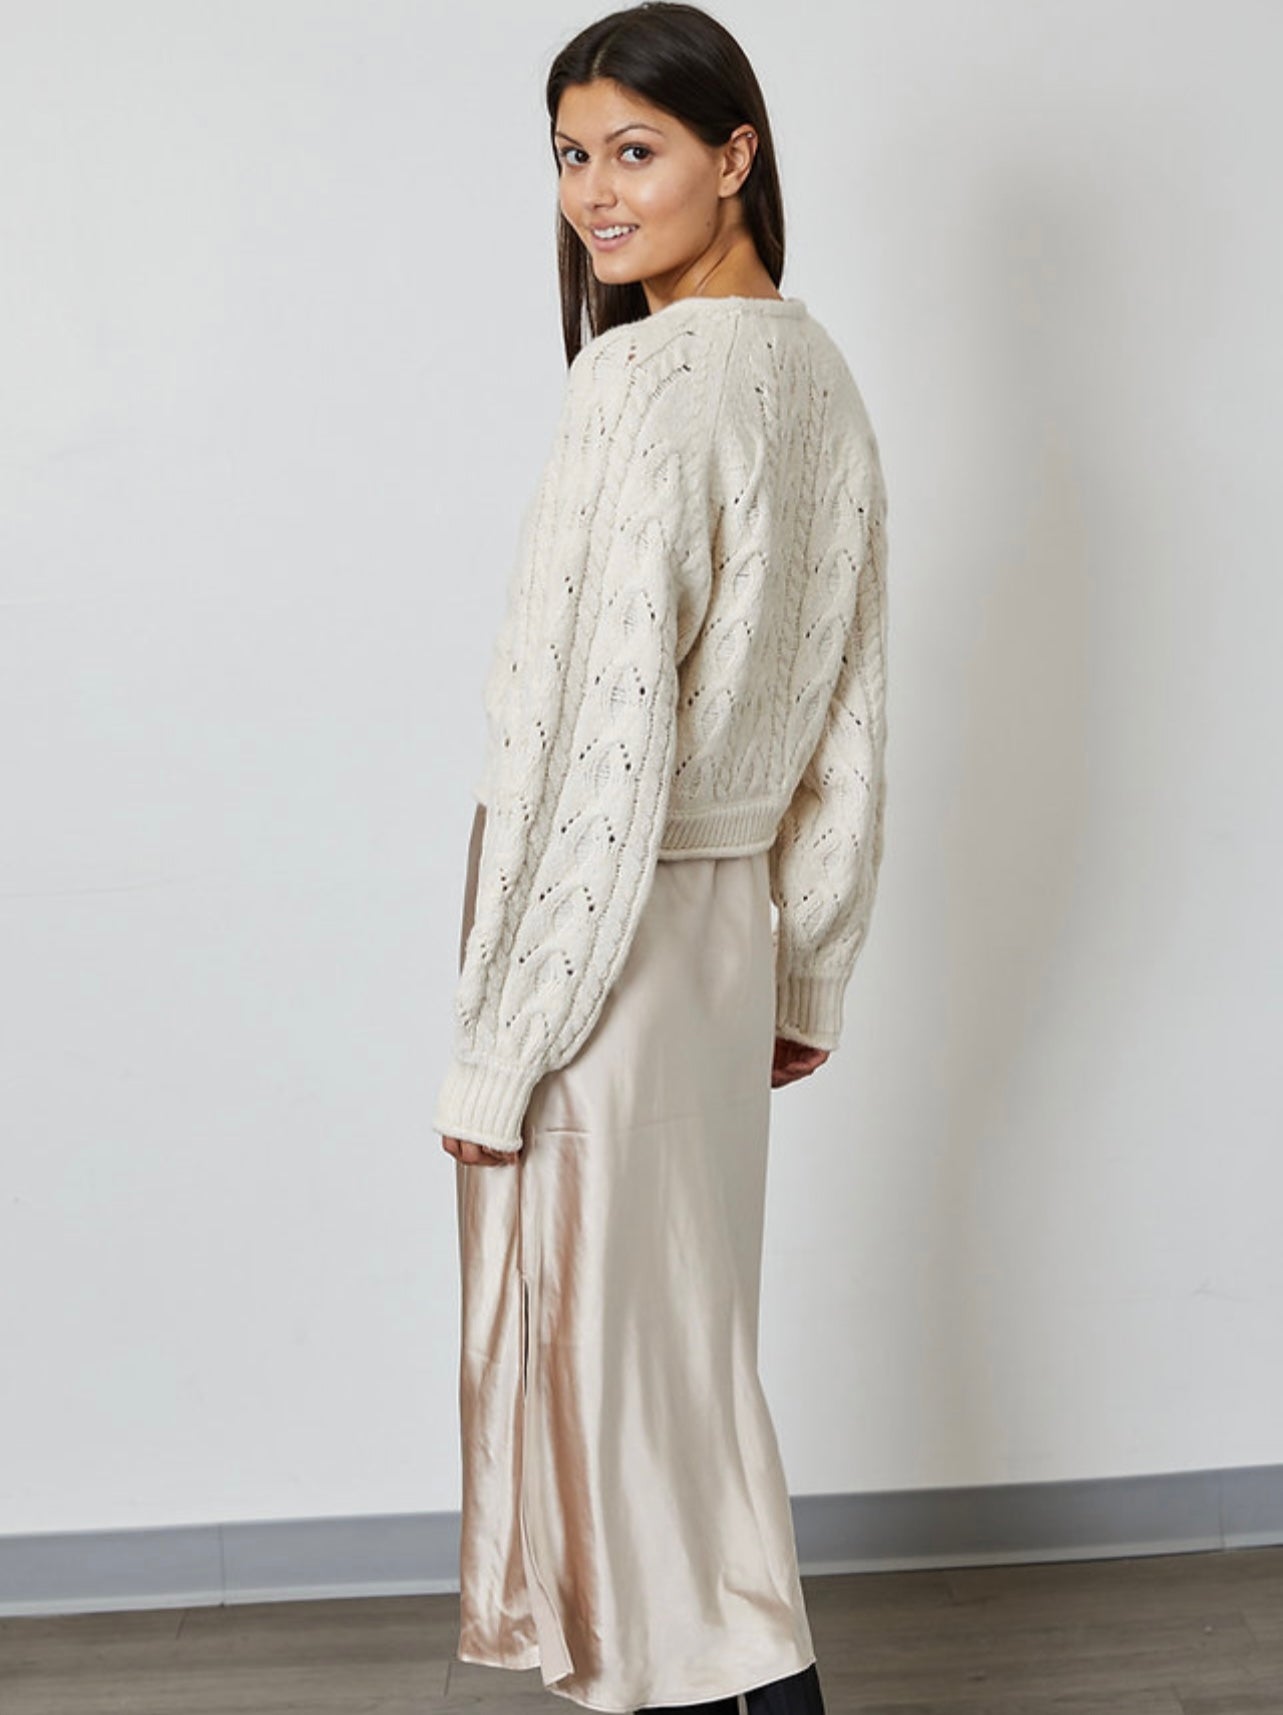 dh New York Emi Sweater / Silk Dress Combo in Ivory